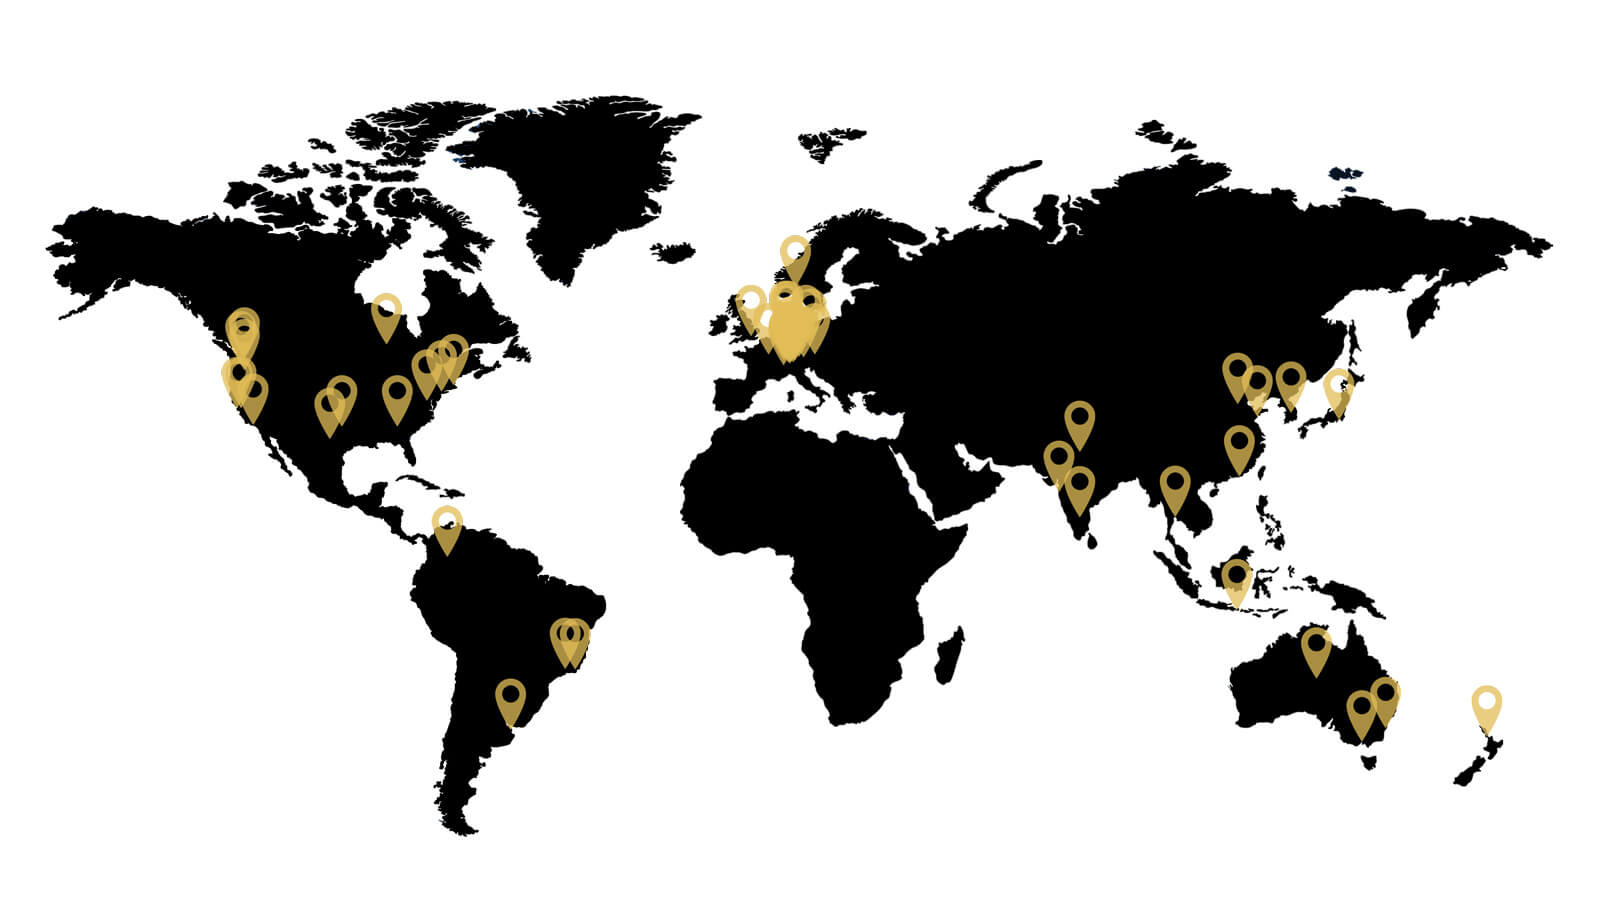 TaKeTiNa global network - Cities worldwide